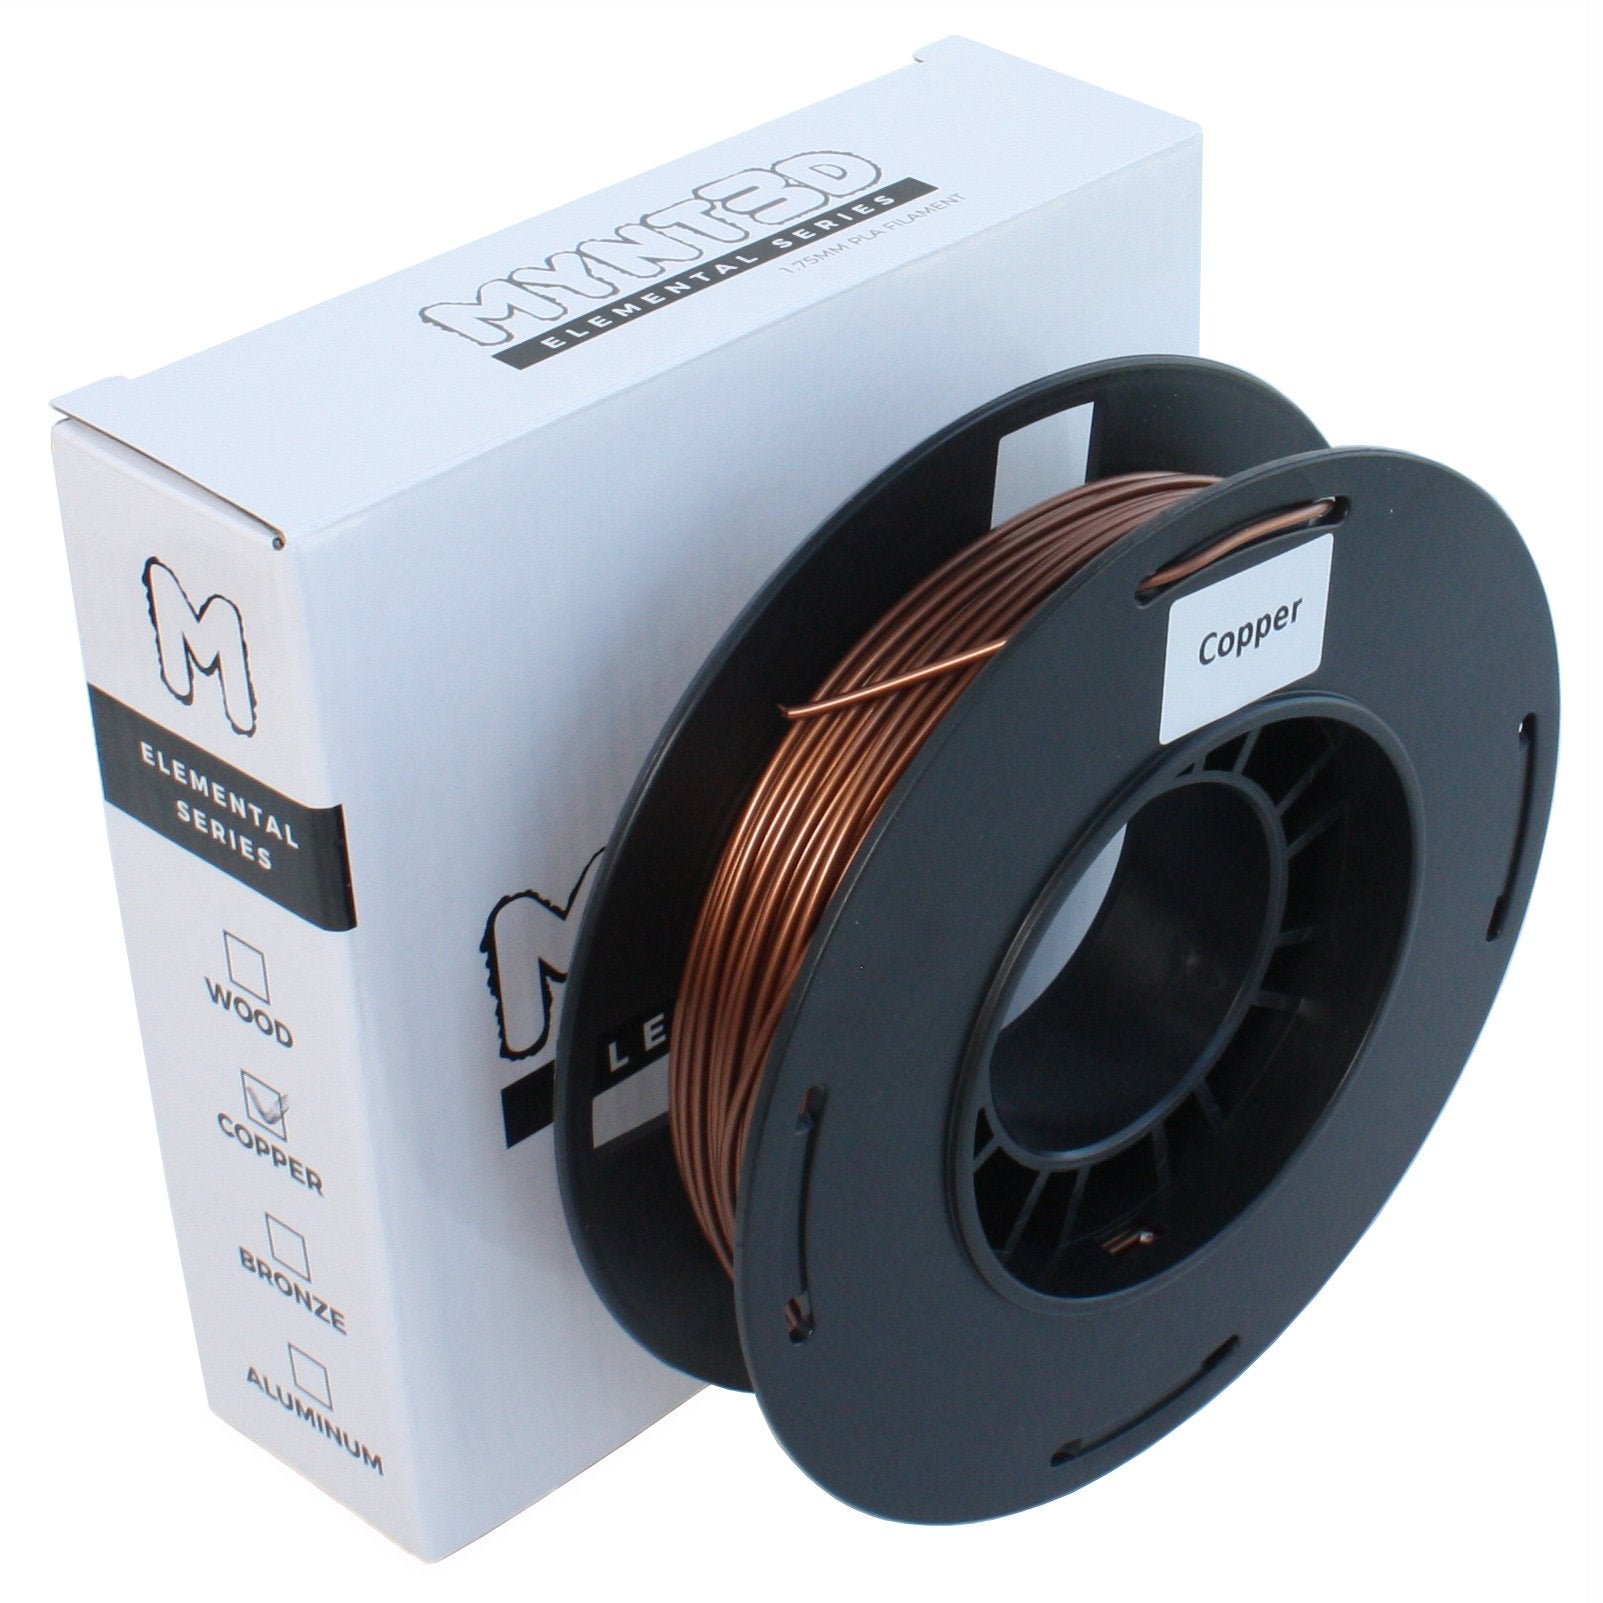 200g Copper PLA Filament Spool